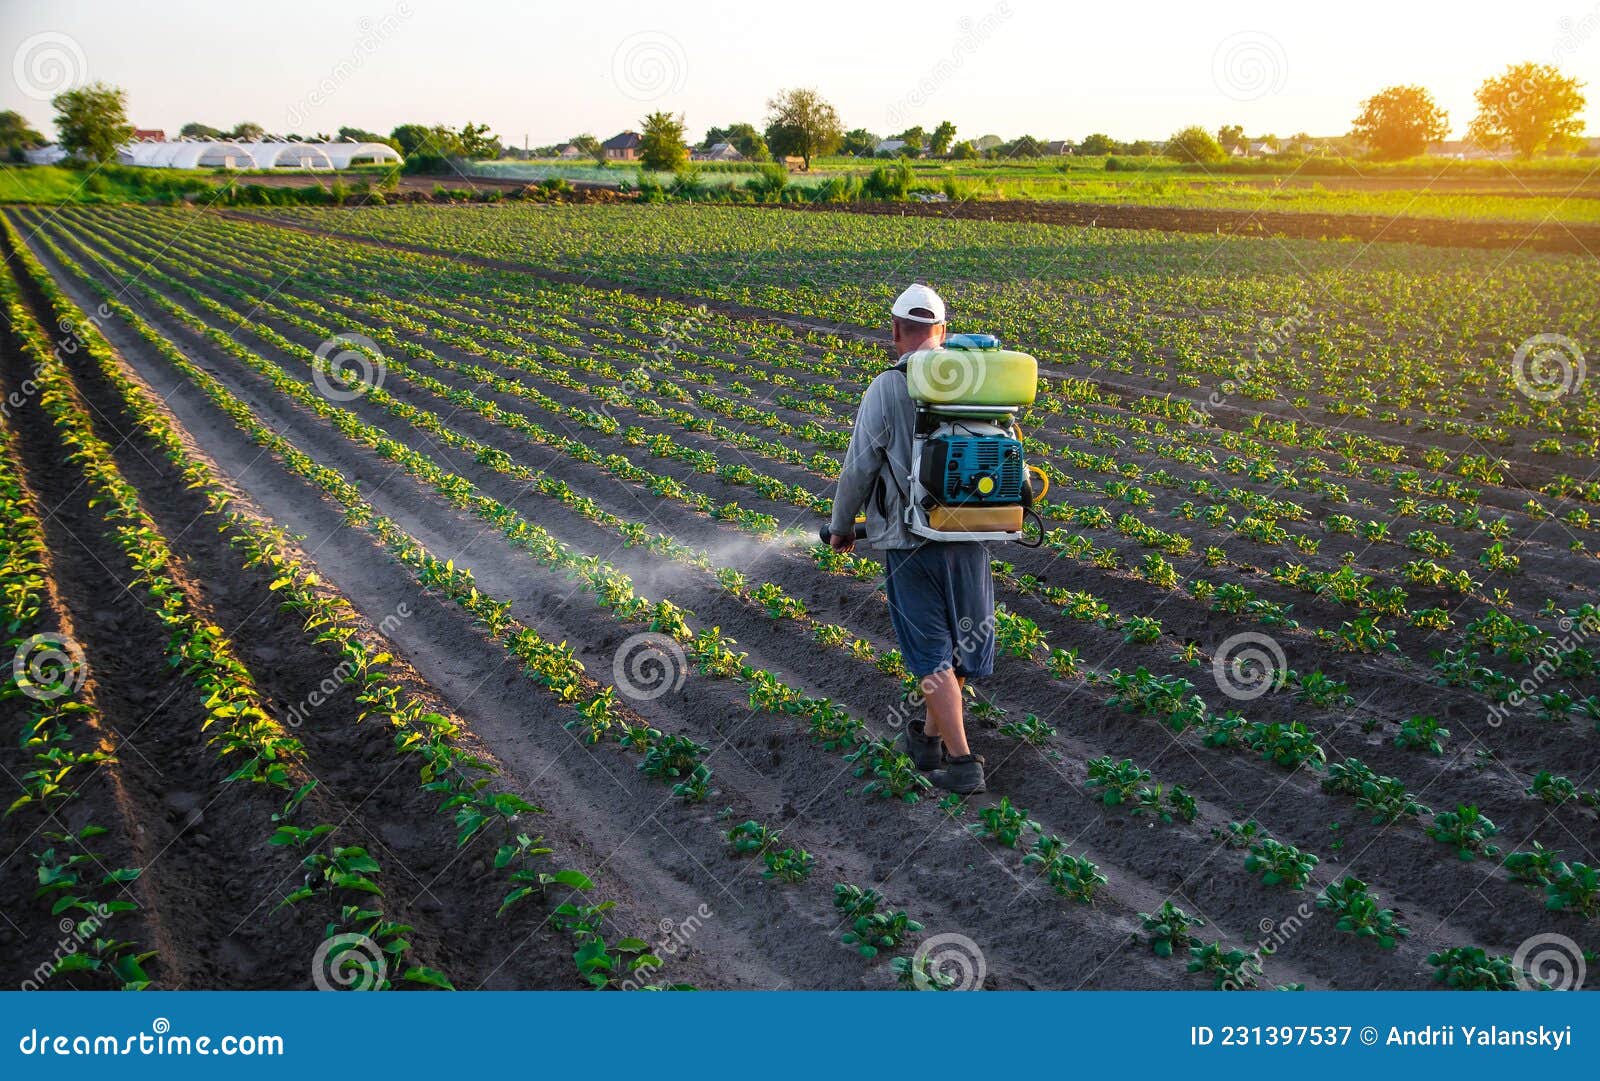 farmer sprays a potato plantation with a sprayer. chemical treatment. mist sprayer, fungicide and pesticide. effective crop